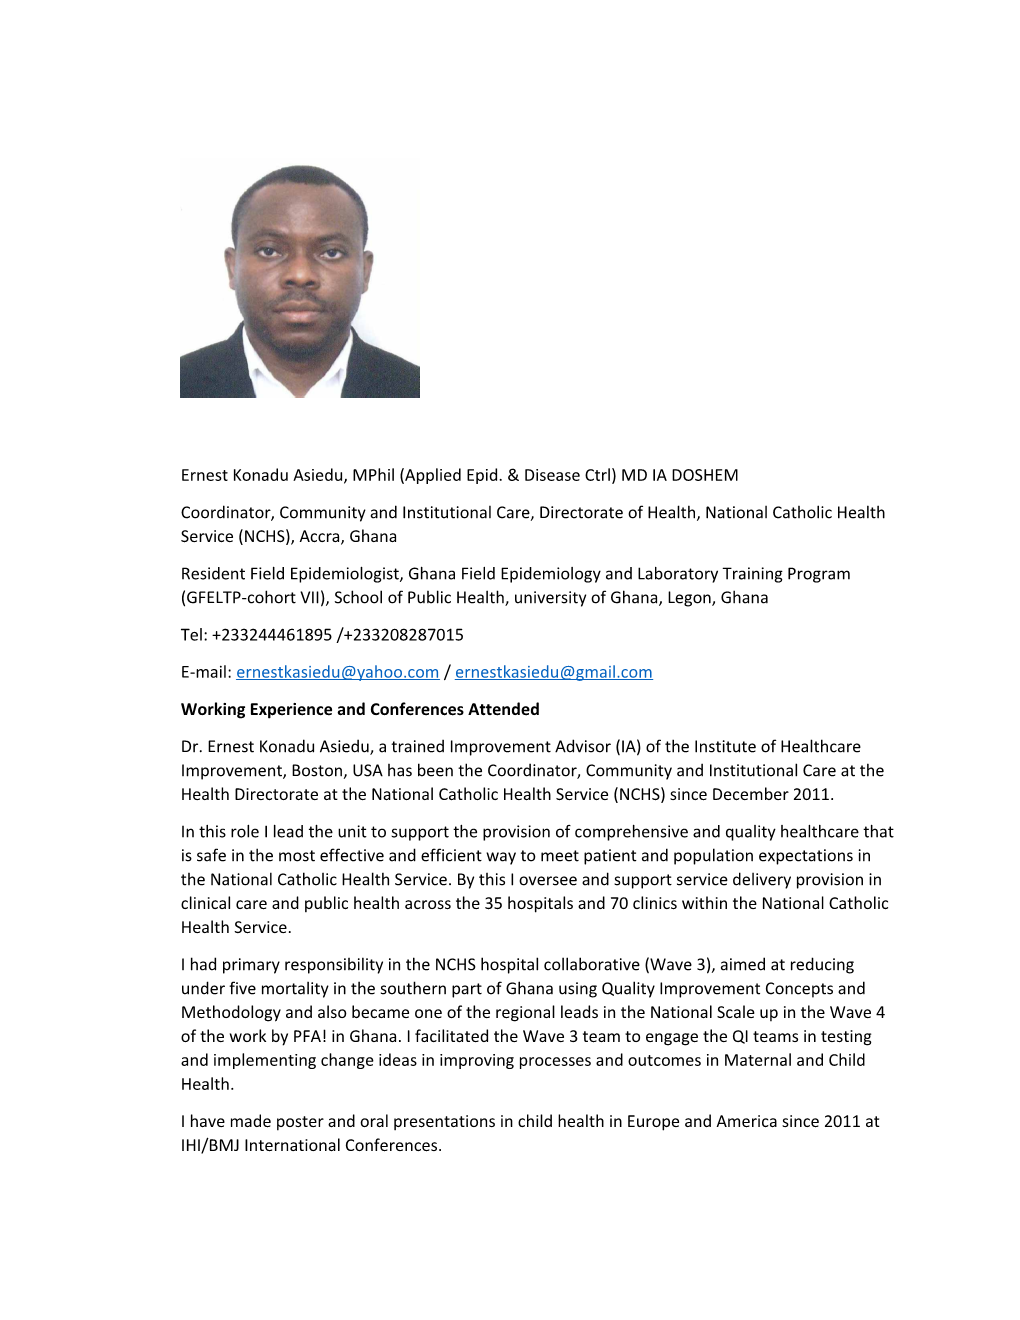 Ernest Konadu Asiedu, Mphil (Applied Epid. & Disease Ctrl) MD IA DOSHEM